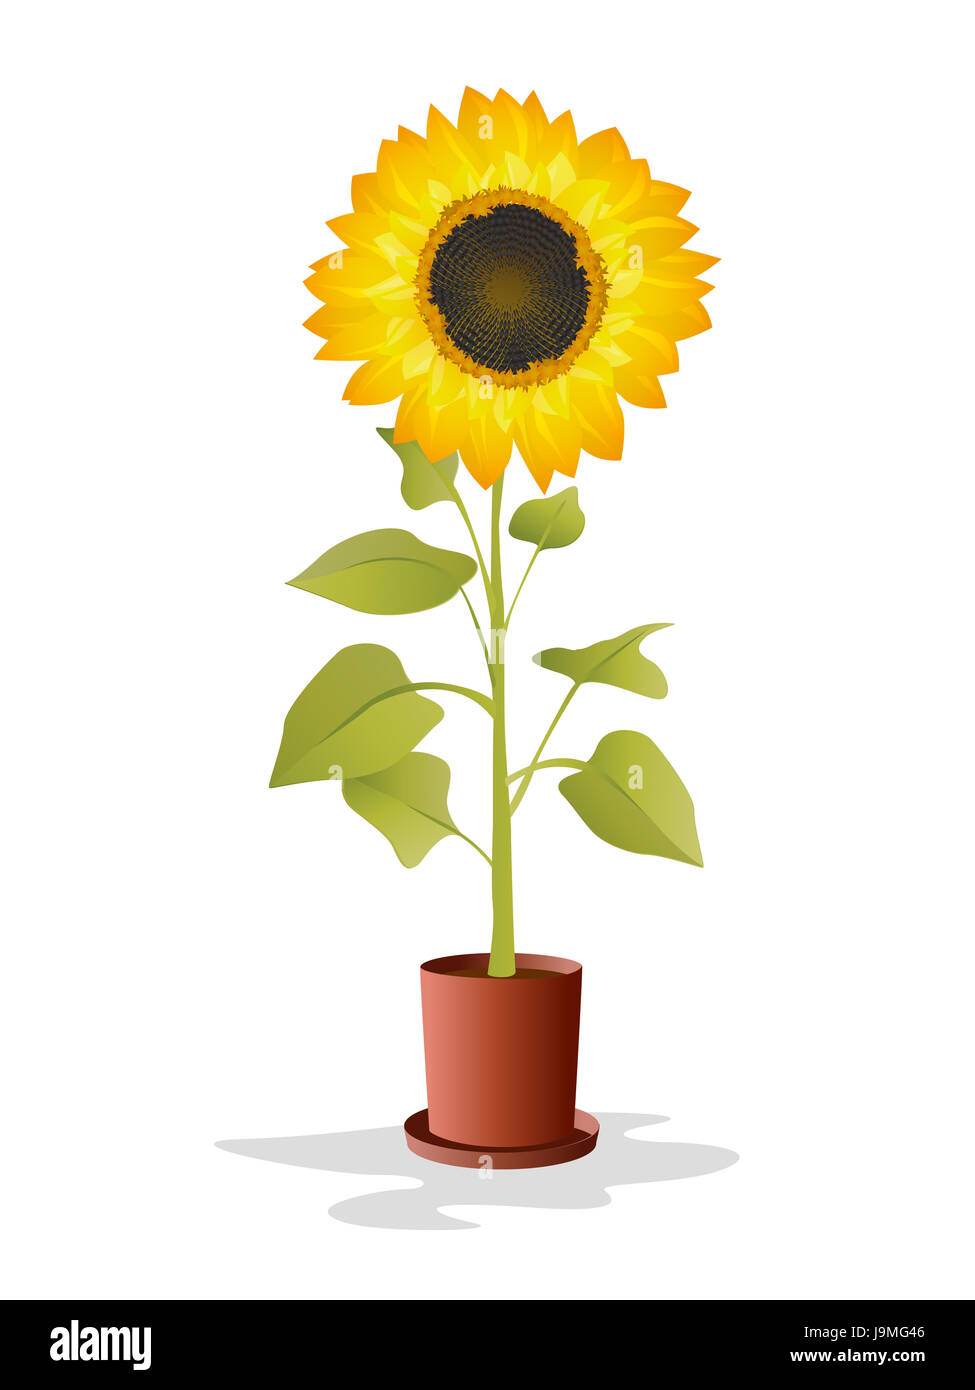 object, flower, sunflower, plant, decor, decoration, one, white, yellow, leaf, Stock Photo